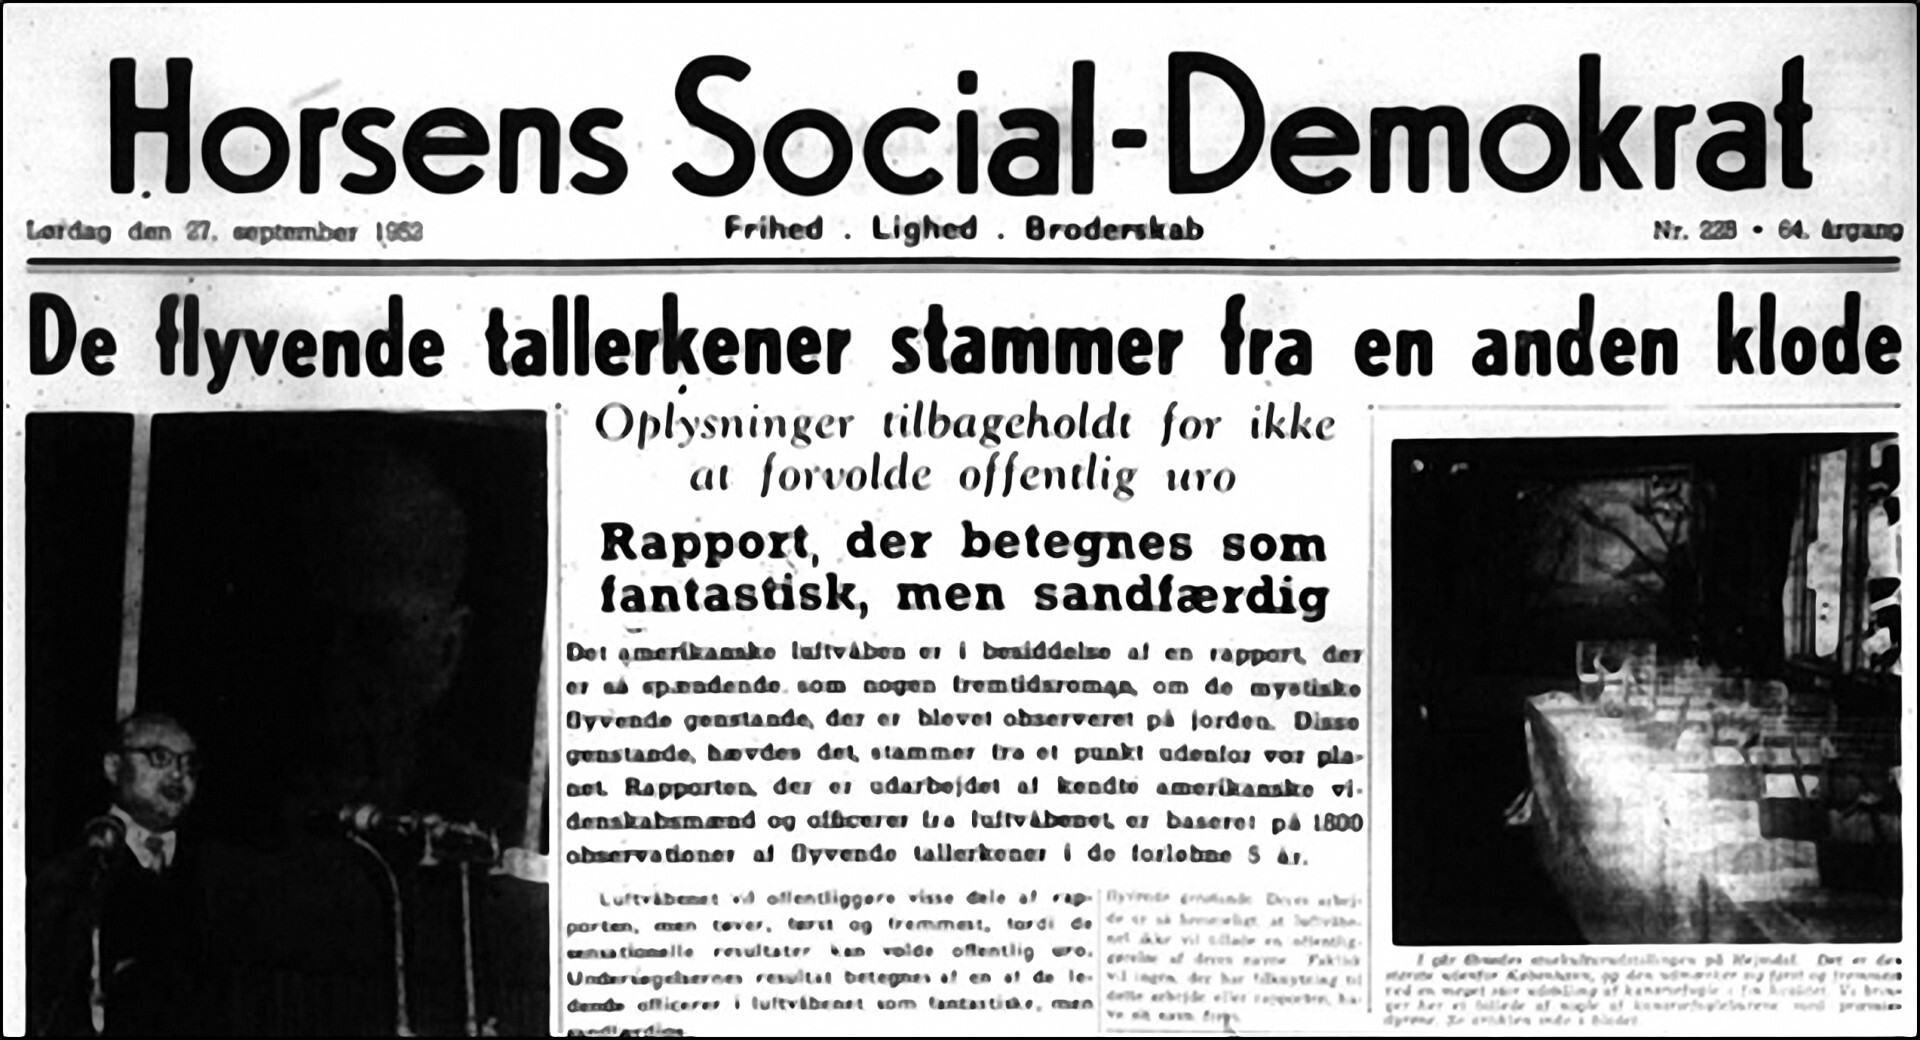 09-horsens-social-demokrat-1952-09-27-300-large-1